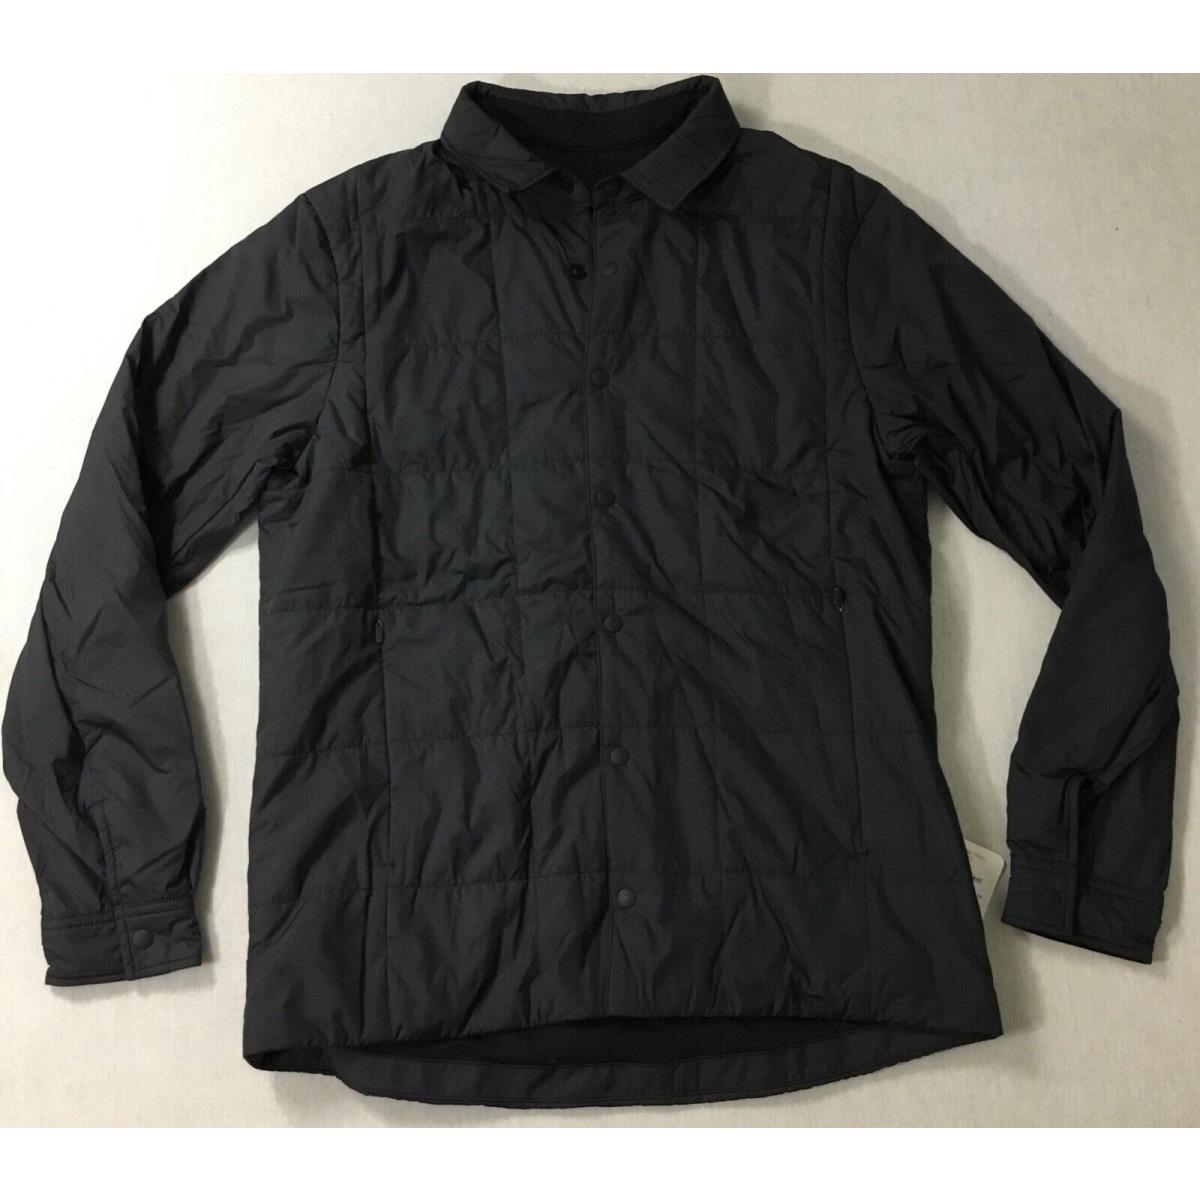 Lululemon Men s Reversible About-face Shacket Jacket Black LM4690S Size S